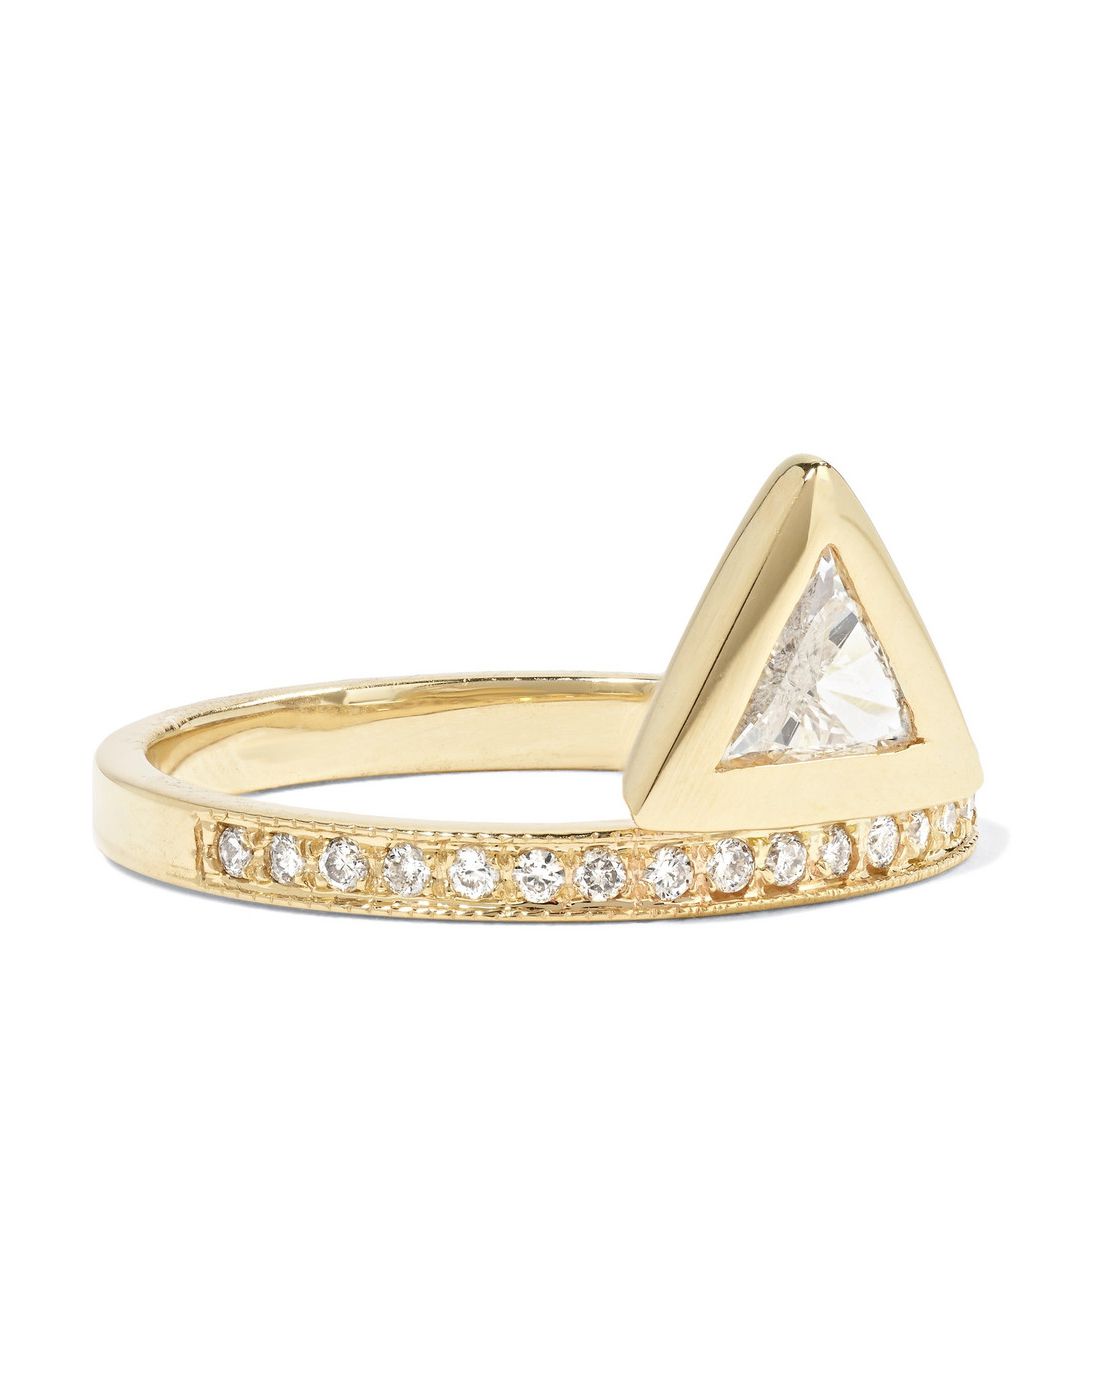 bezel-set trillion-cut diamond engagement ring